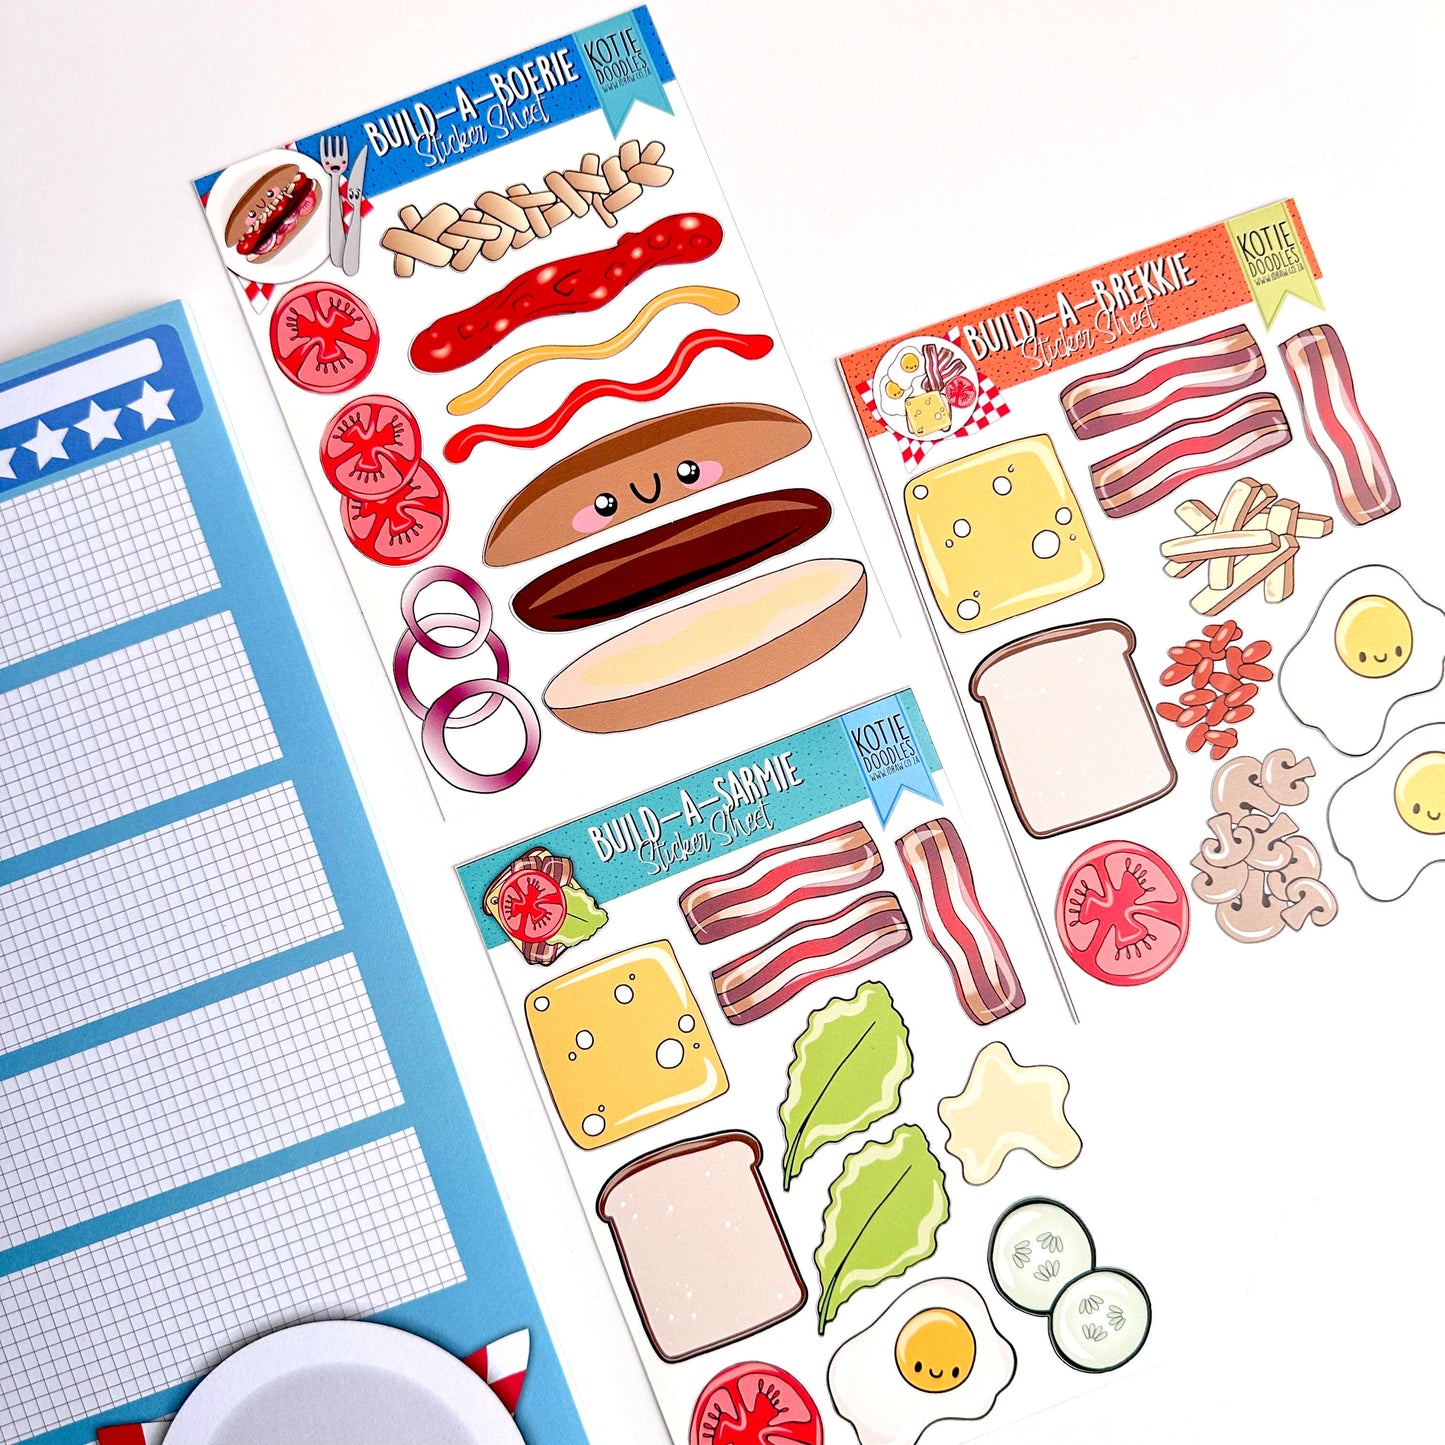 Build-a-boerie sticker sheet. Build-a-brekkie sticker sheet with food illustrations. Build-a-sarmie sticker sheet.